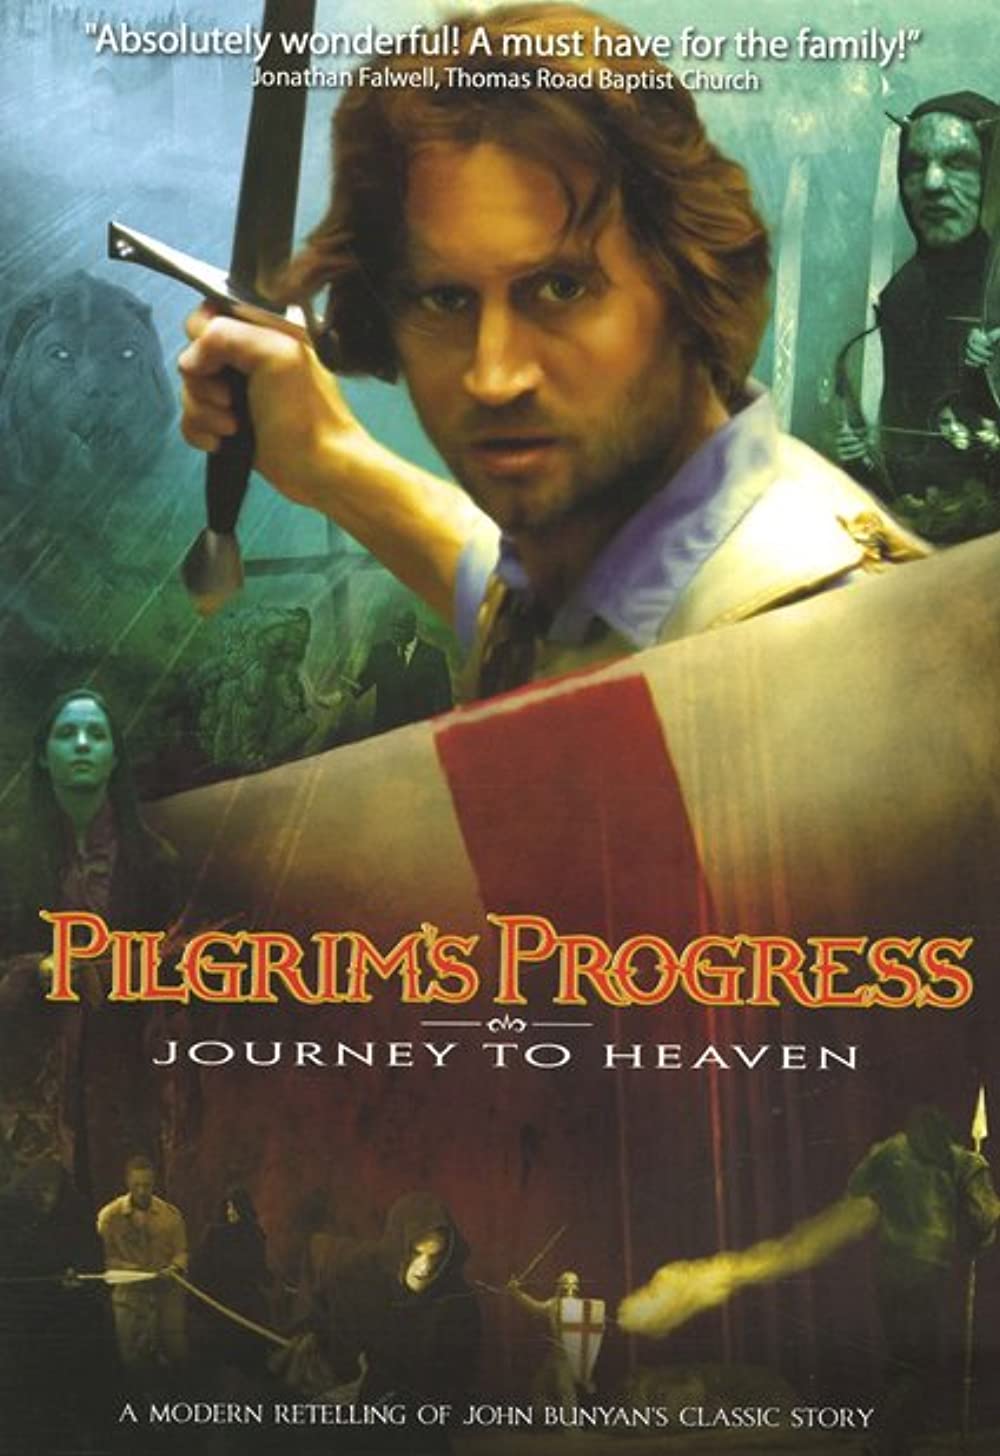 Pilgrim's Progress Movie Download - Watch Pilgrim's Progress Movie Review